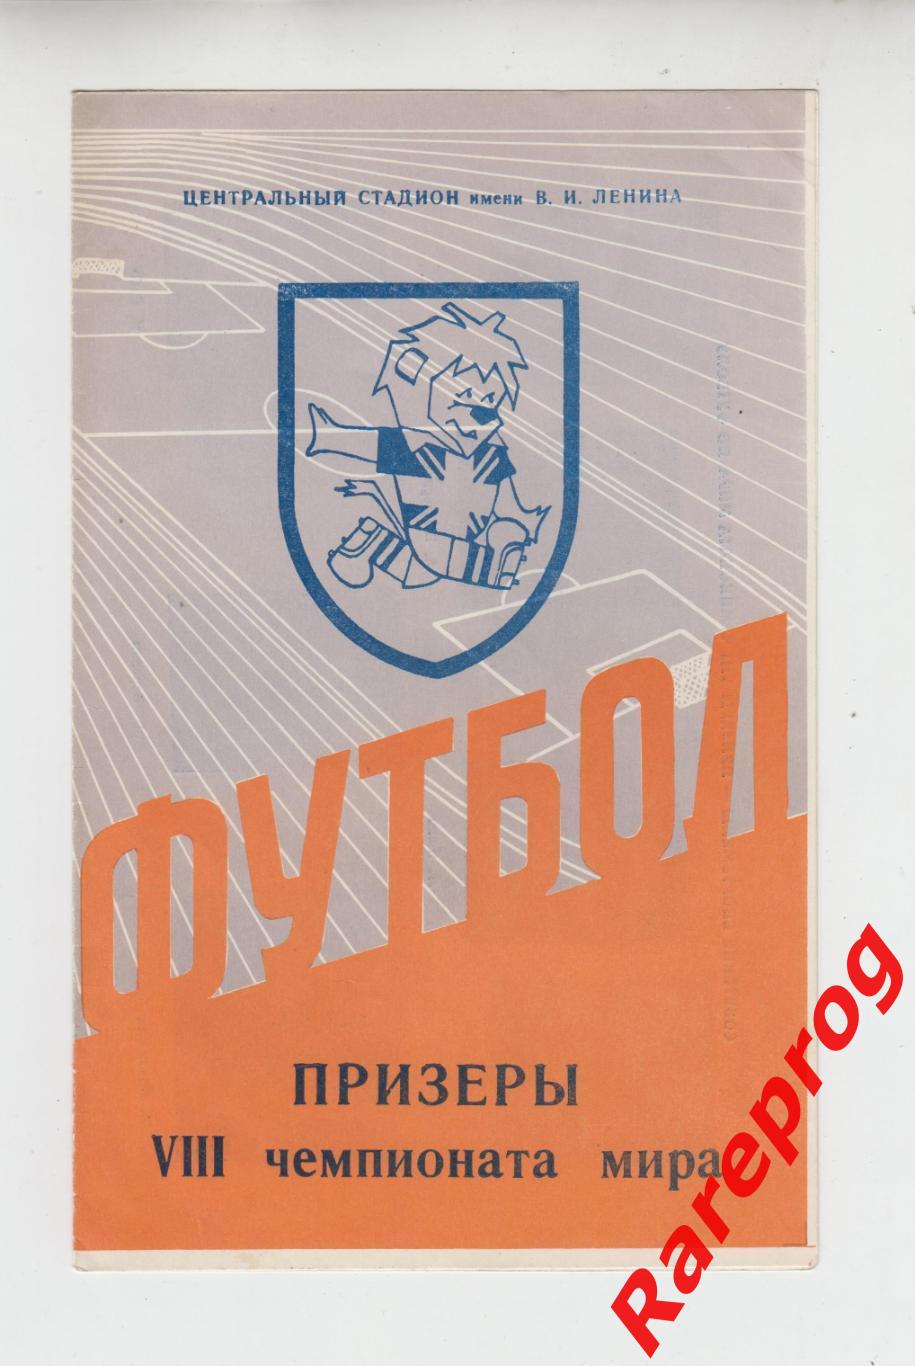 сборная СССР призер Чемпионат Мира - ЧМ ФИФА 66 Англия 1966